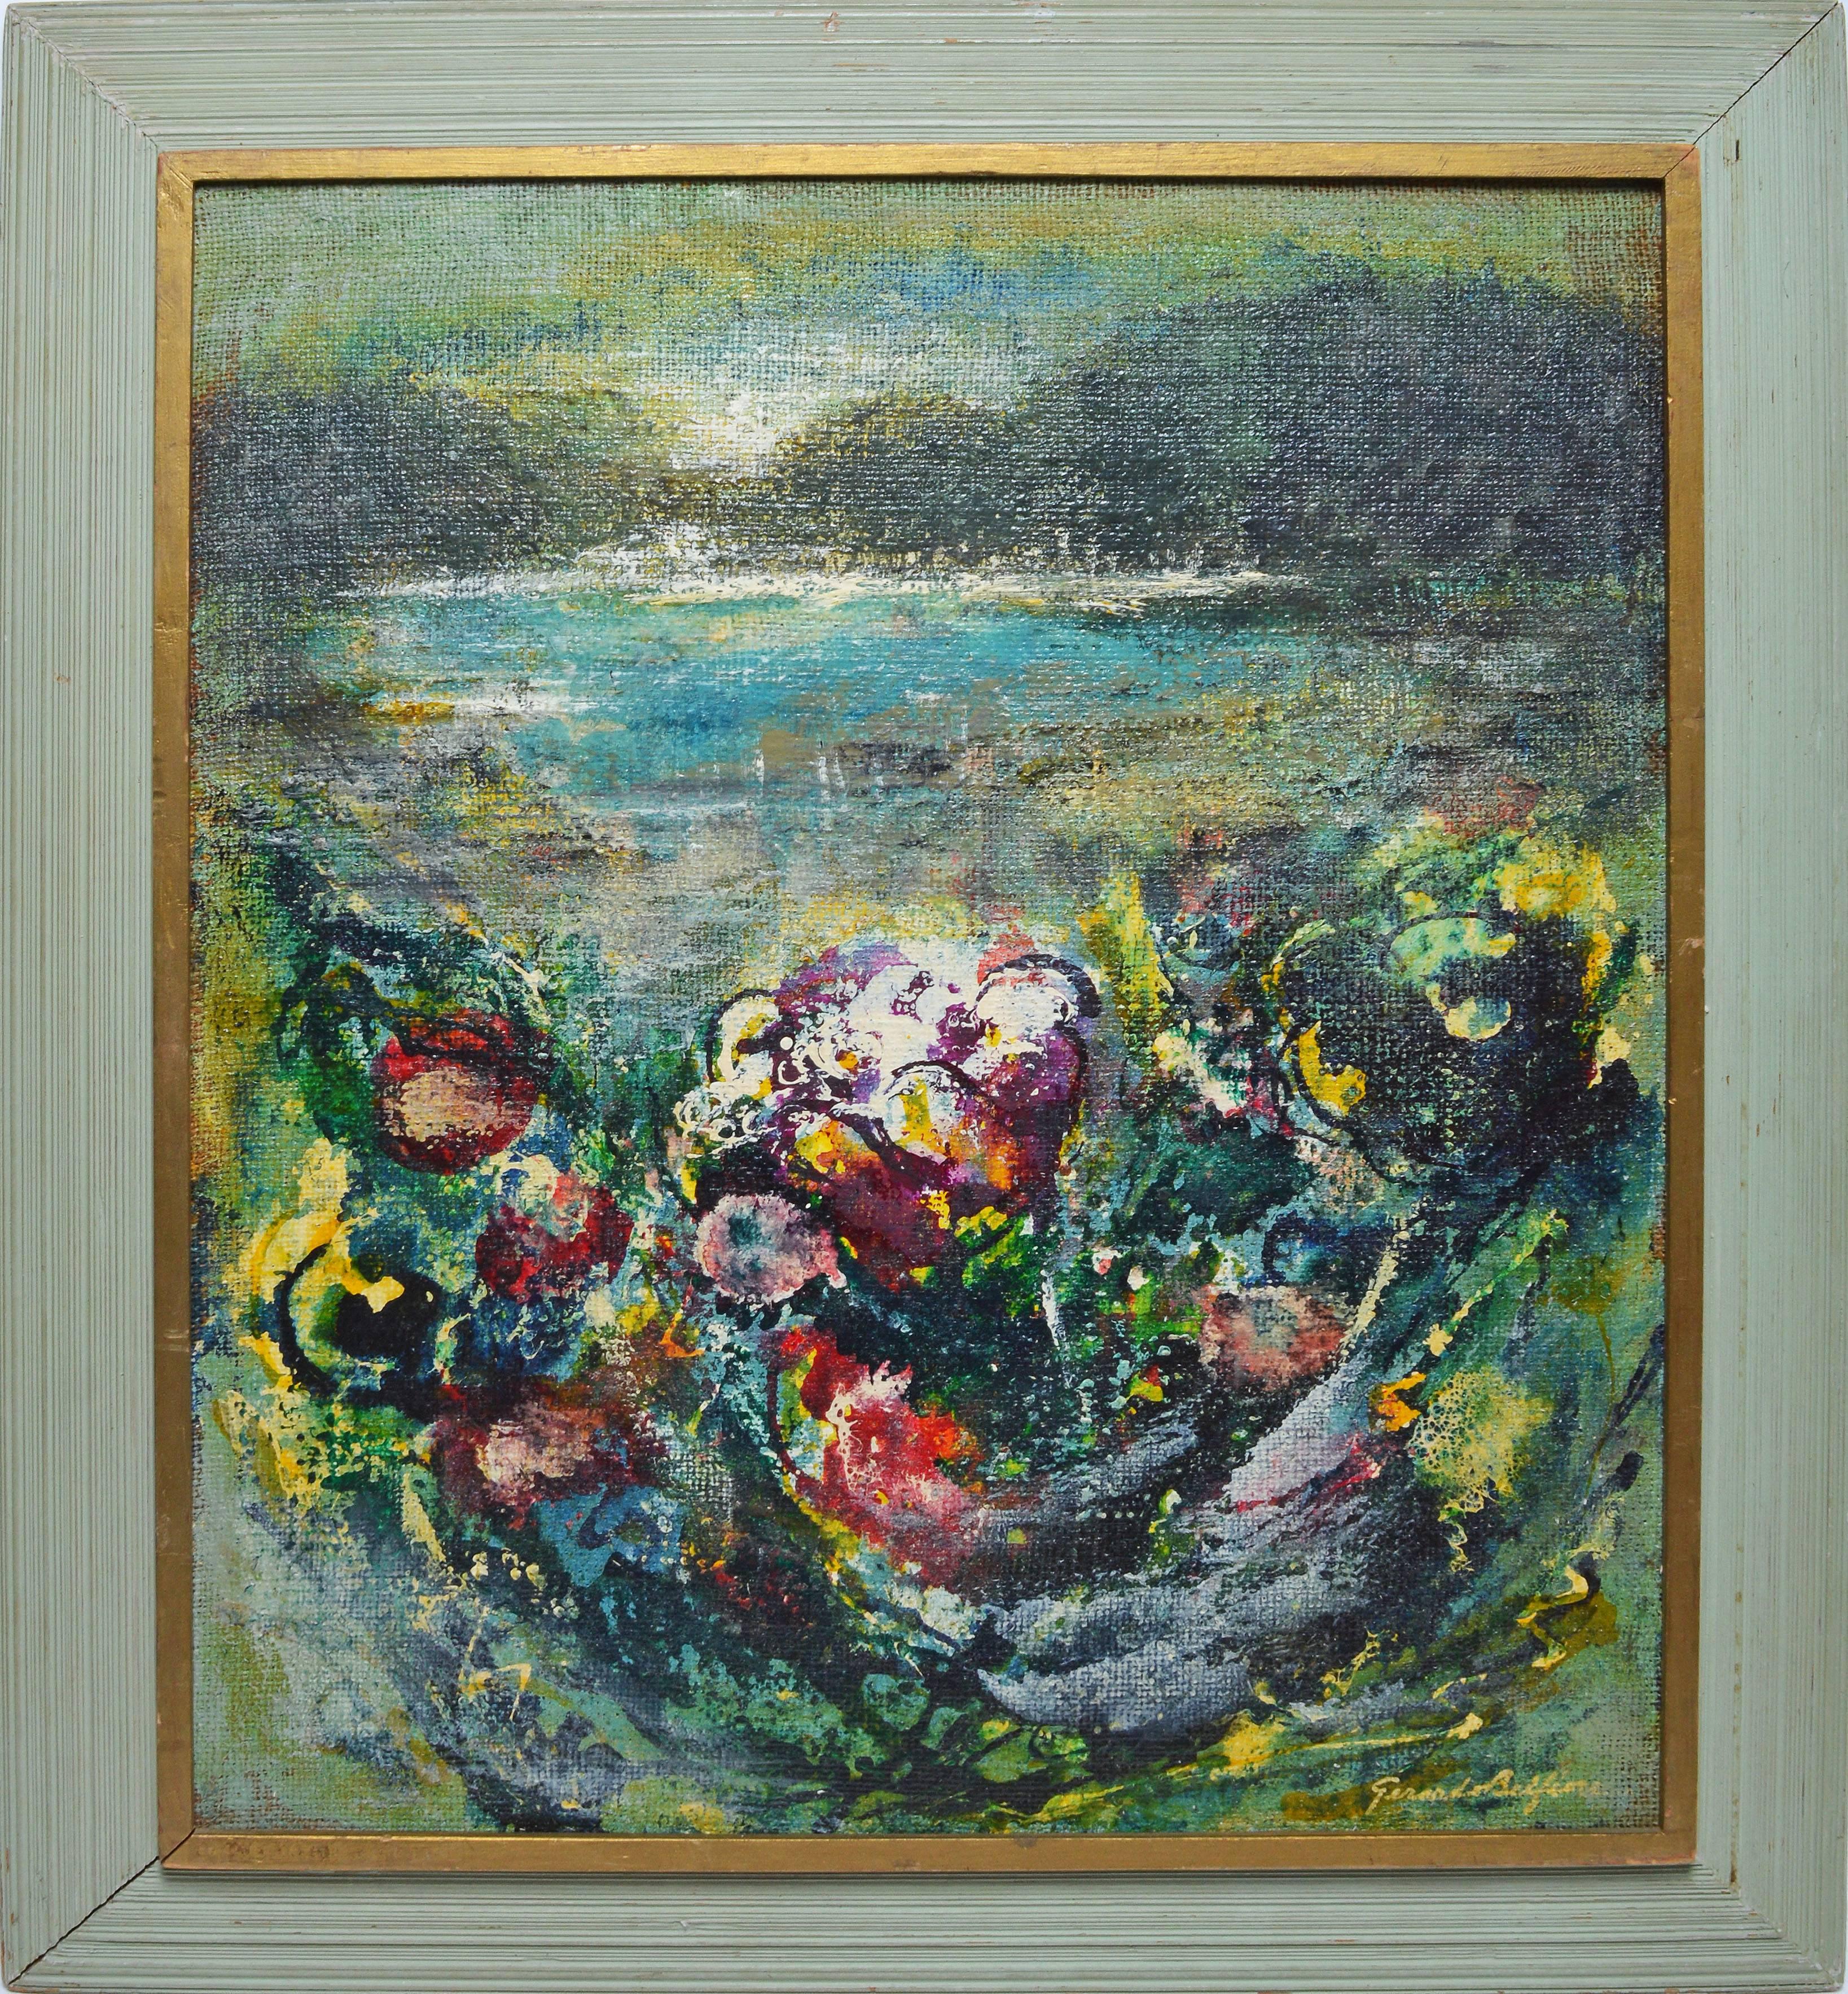 Modernist flower landscape by Geraldo Belfiore.  Oil on board, circa 1940.  Signed lower right, "Geraldo Belfiore".   Displayed in a period modernist frame.  Image size, 21"L x 25"H, overall 26"L x 30"H.